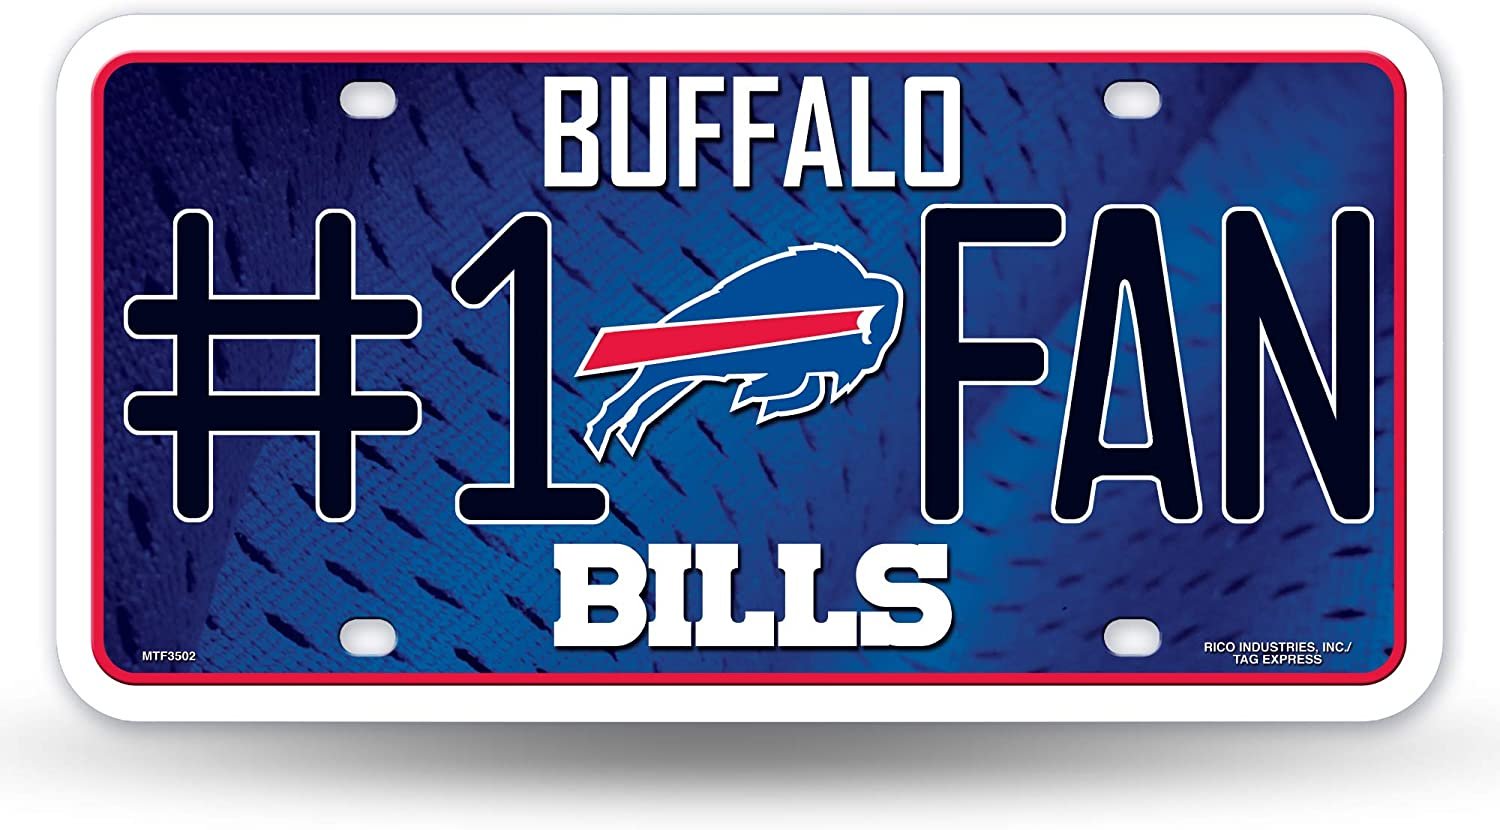 Buffalo Bills #1 Fan Metal License Plate Tag Aluminum Novelty 12x6 Inch